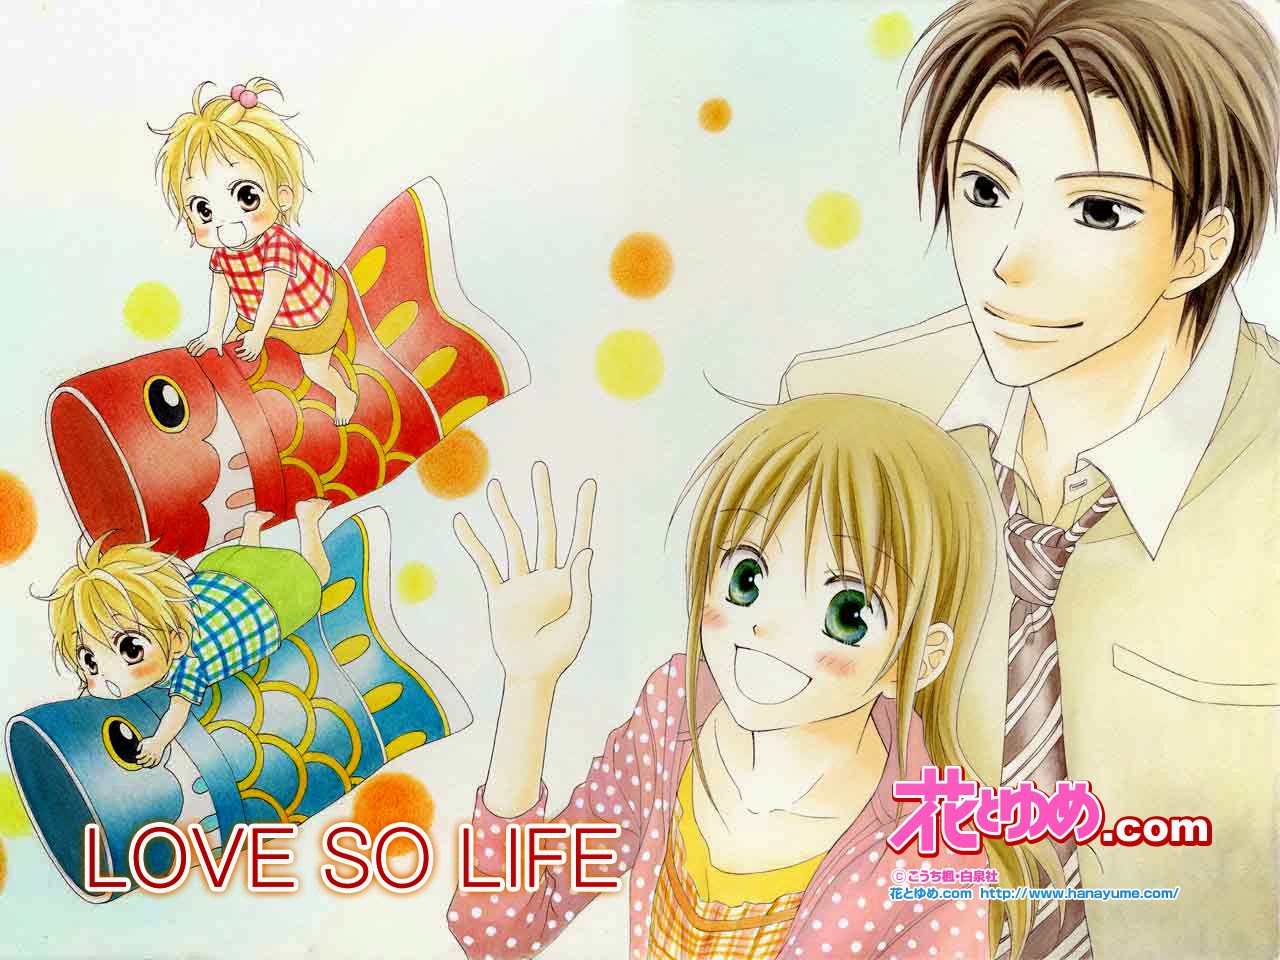 Манга жизнь так прекрасна. Манга осень длиною в жизнь. Love Life Manga.